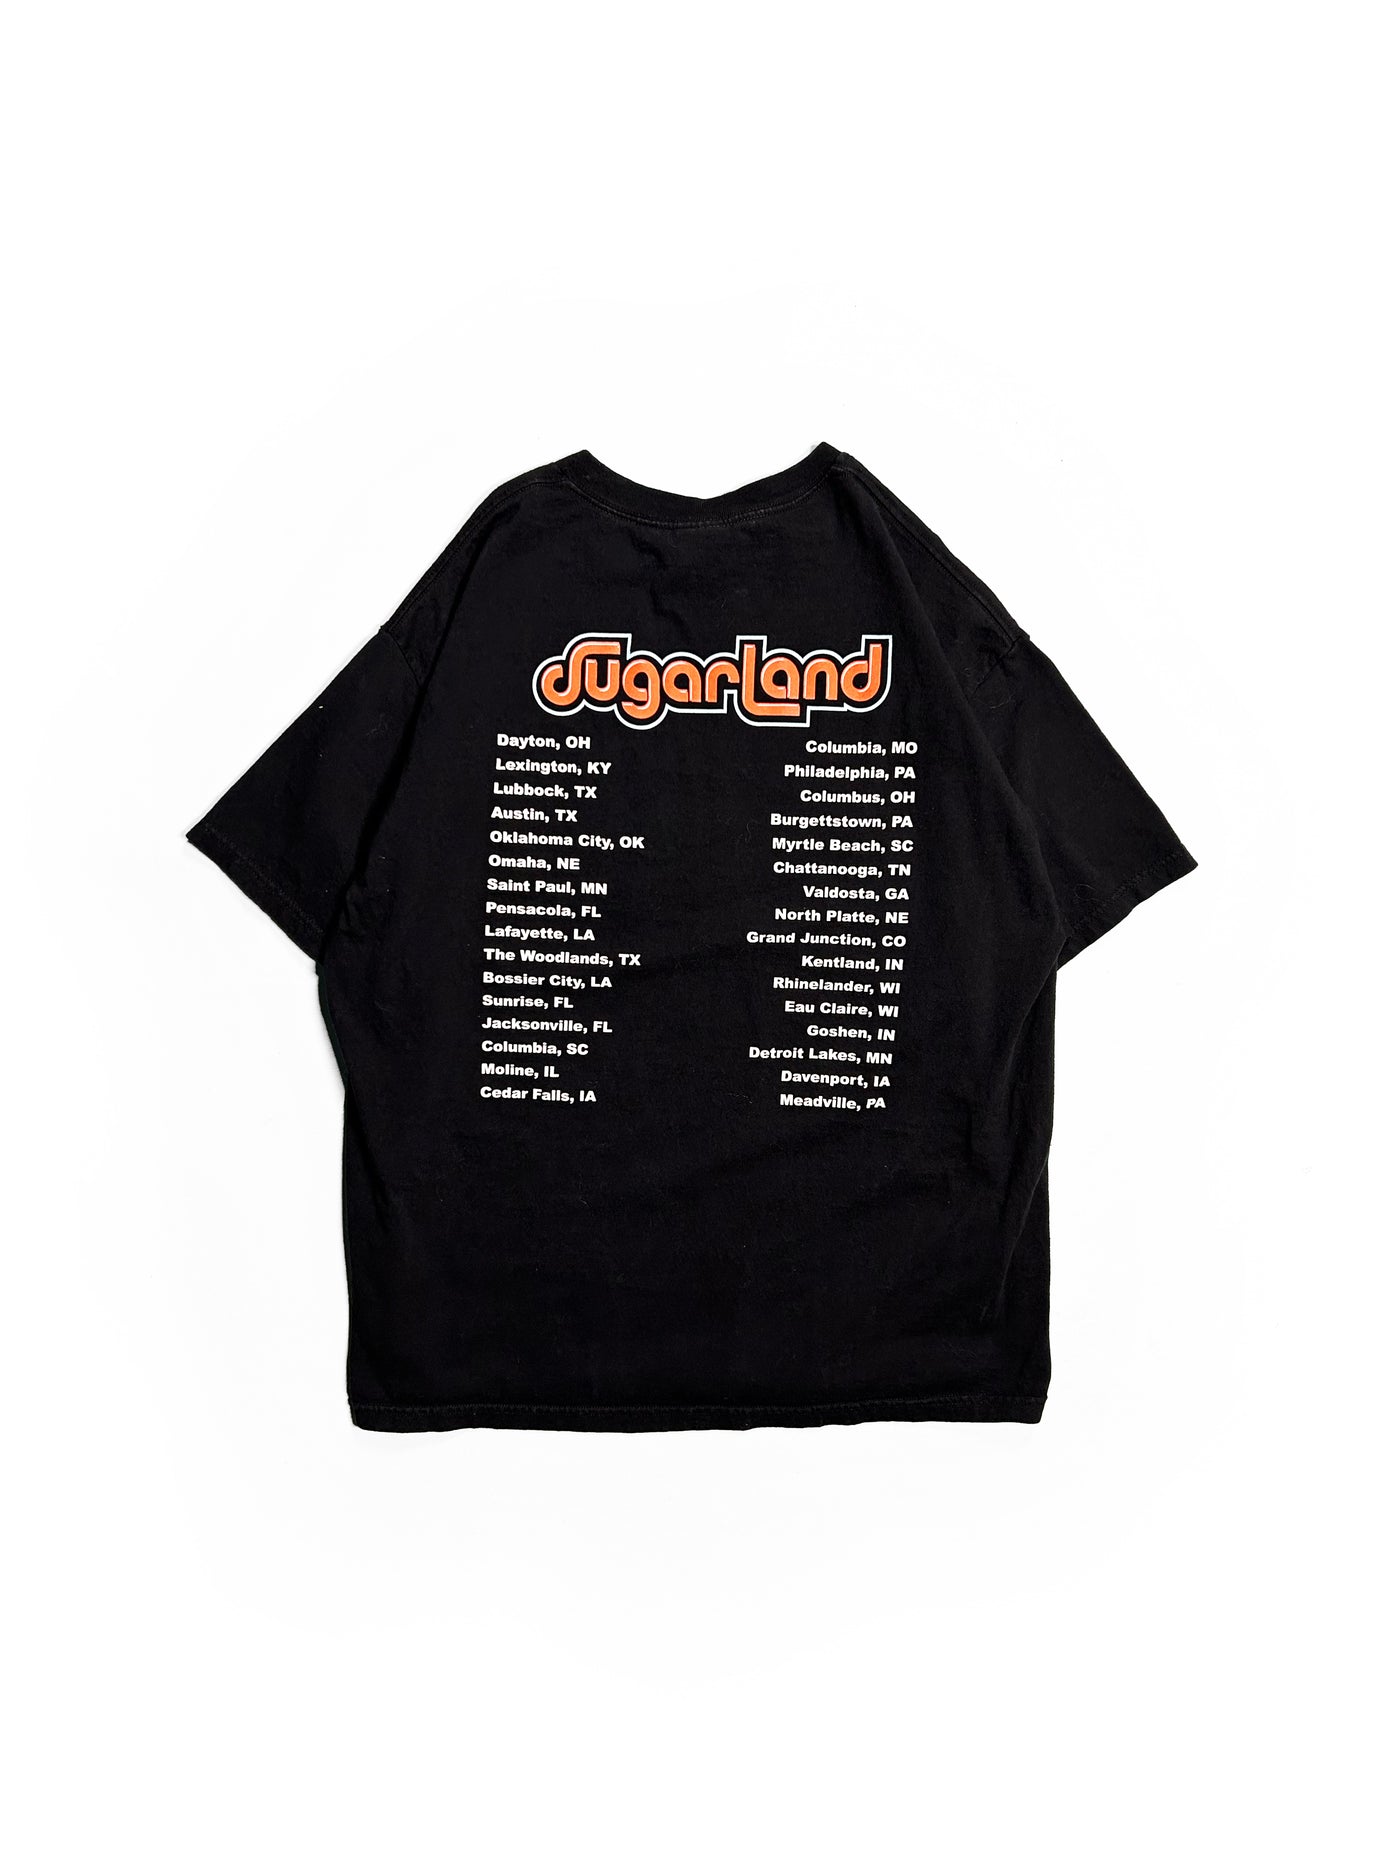 Vintage 2000s Sugarland Tour T-Shirt